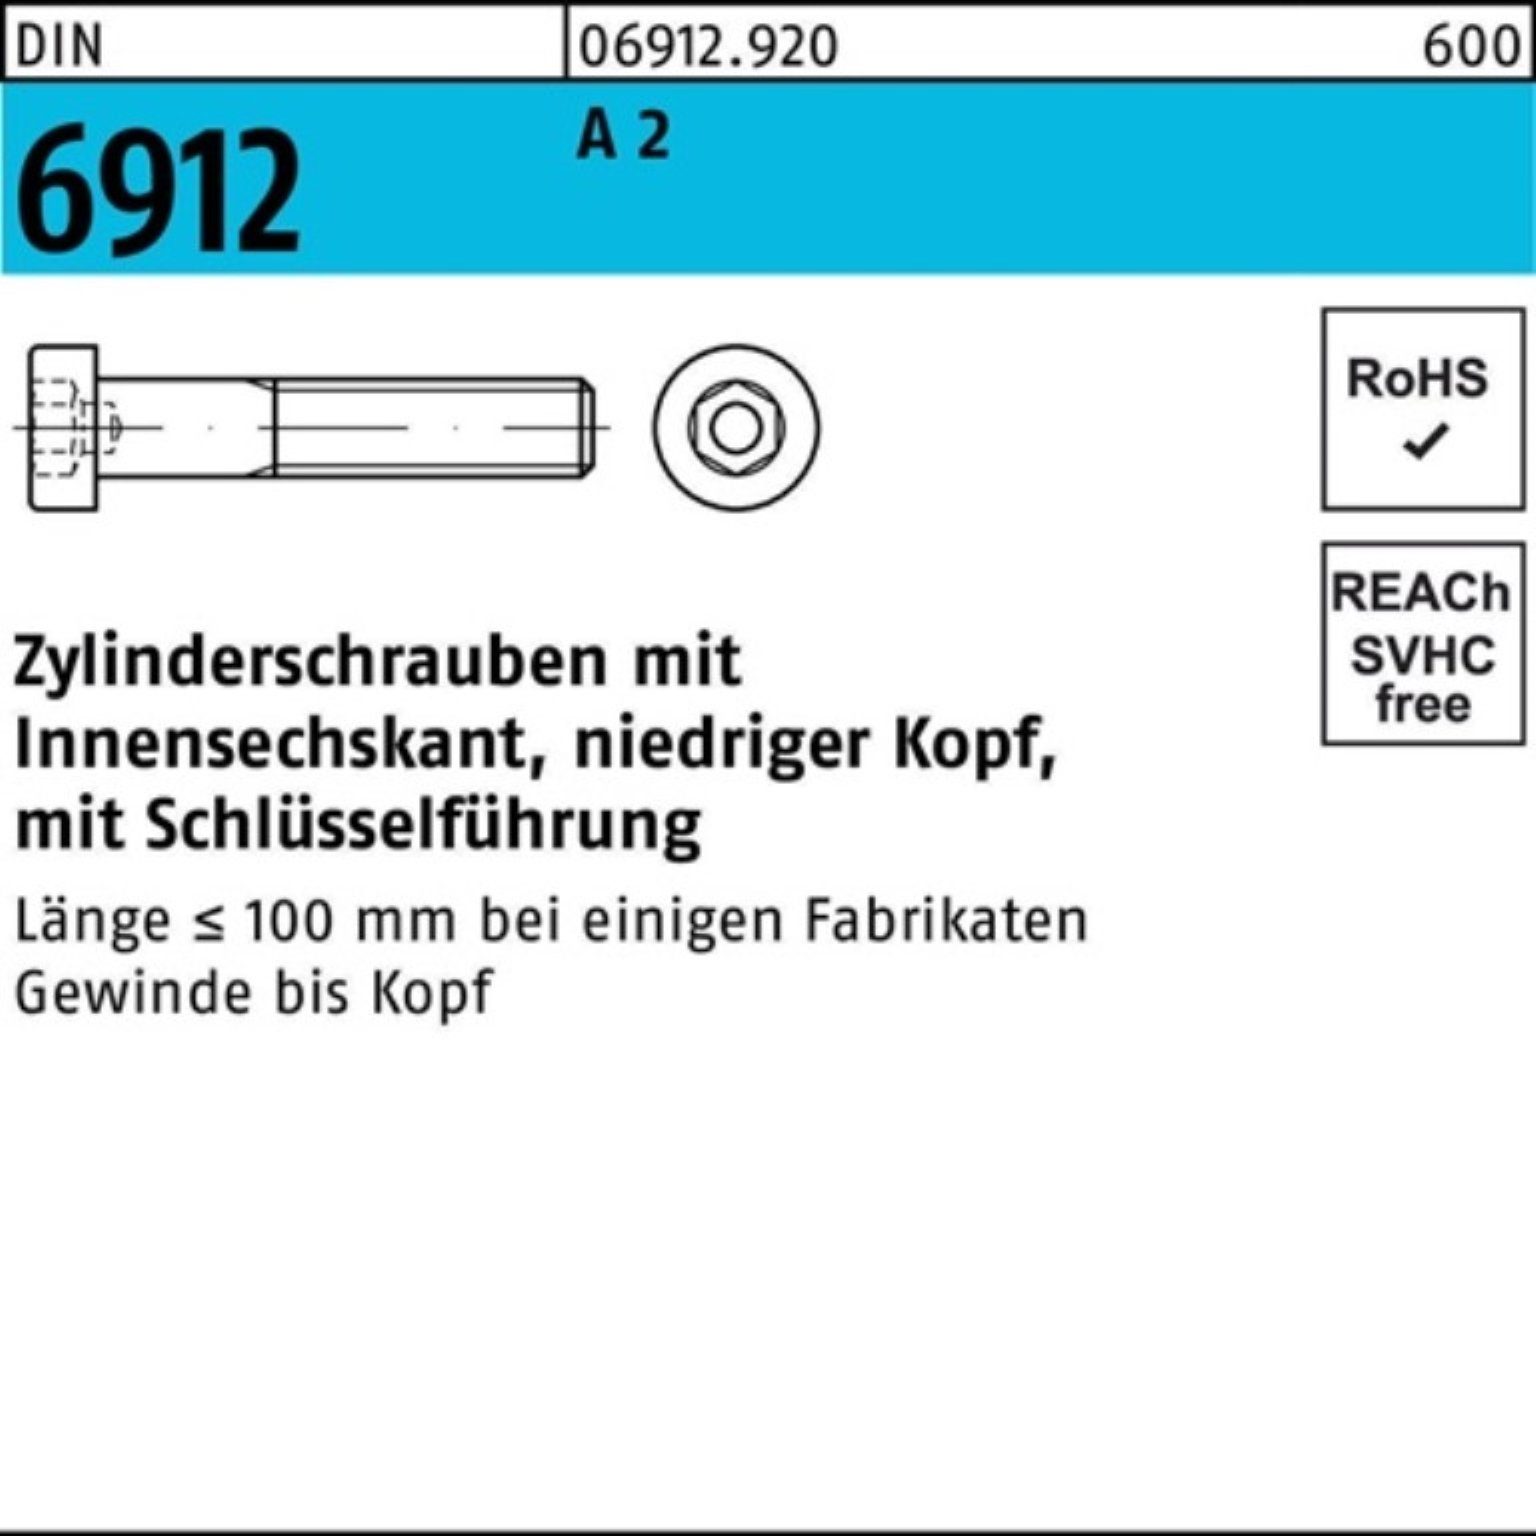 Zylinderschraube D 100er Reyher Zylinderschraube Innen-6kt 55 DIN A 2 Pack 100 Stück 6912 M8x